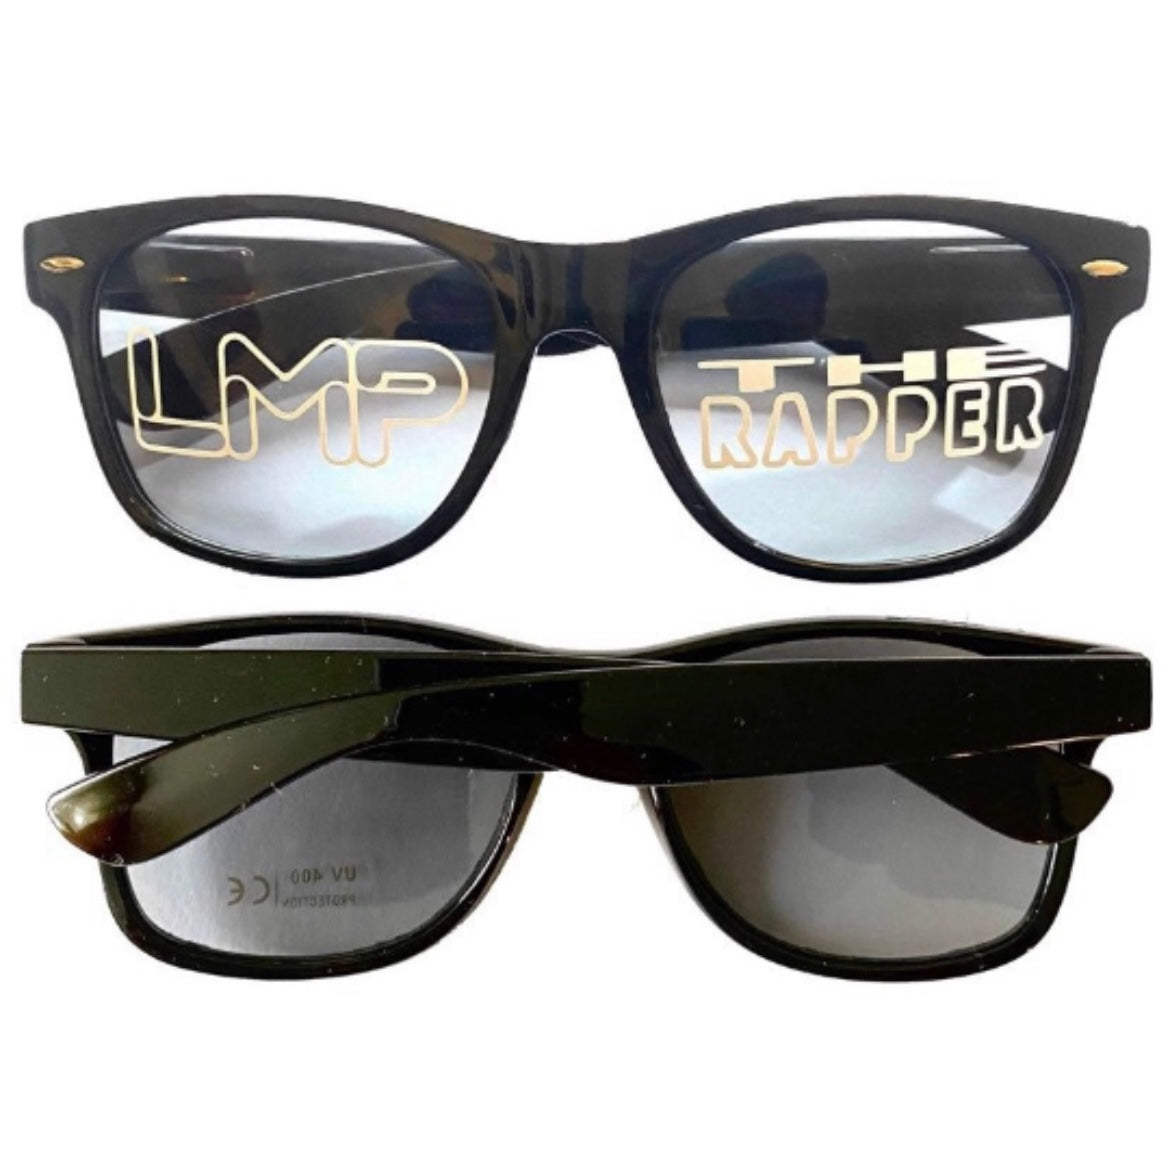 LMP The Rapper Sunglasses